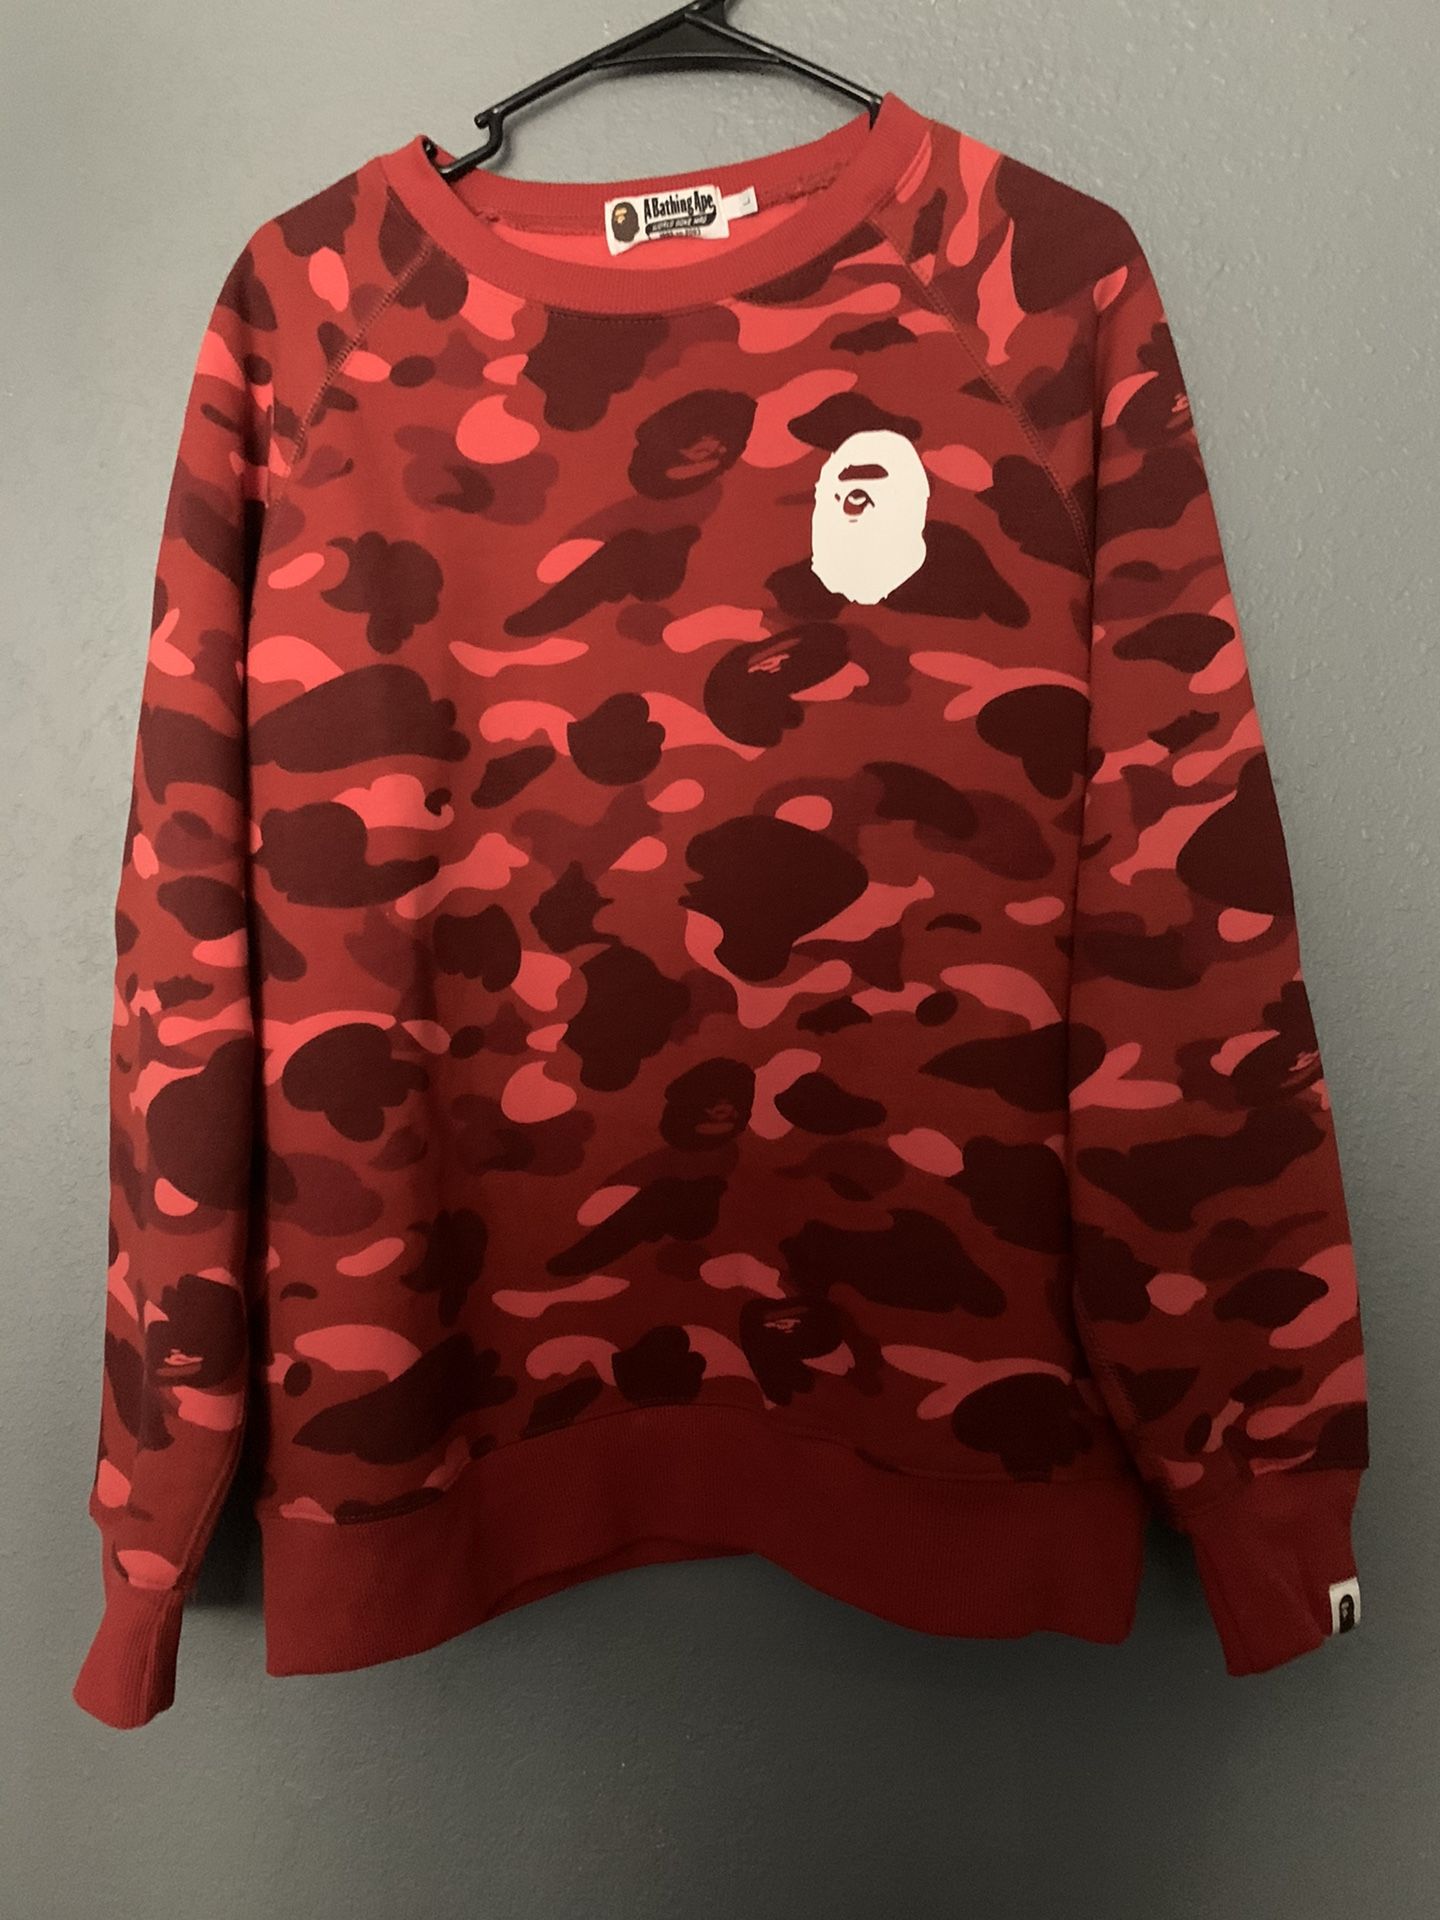 BAPE Red sweatshirt (Large)